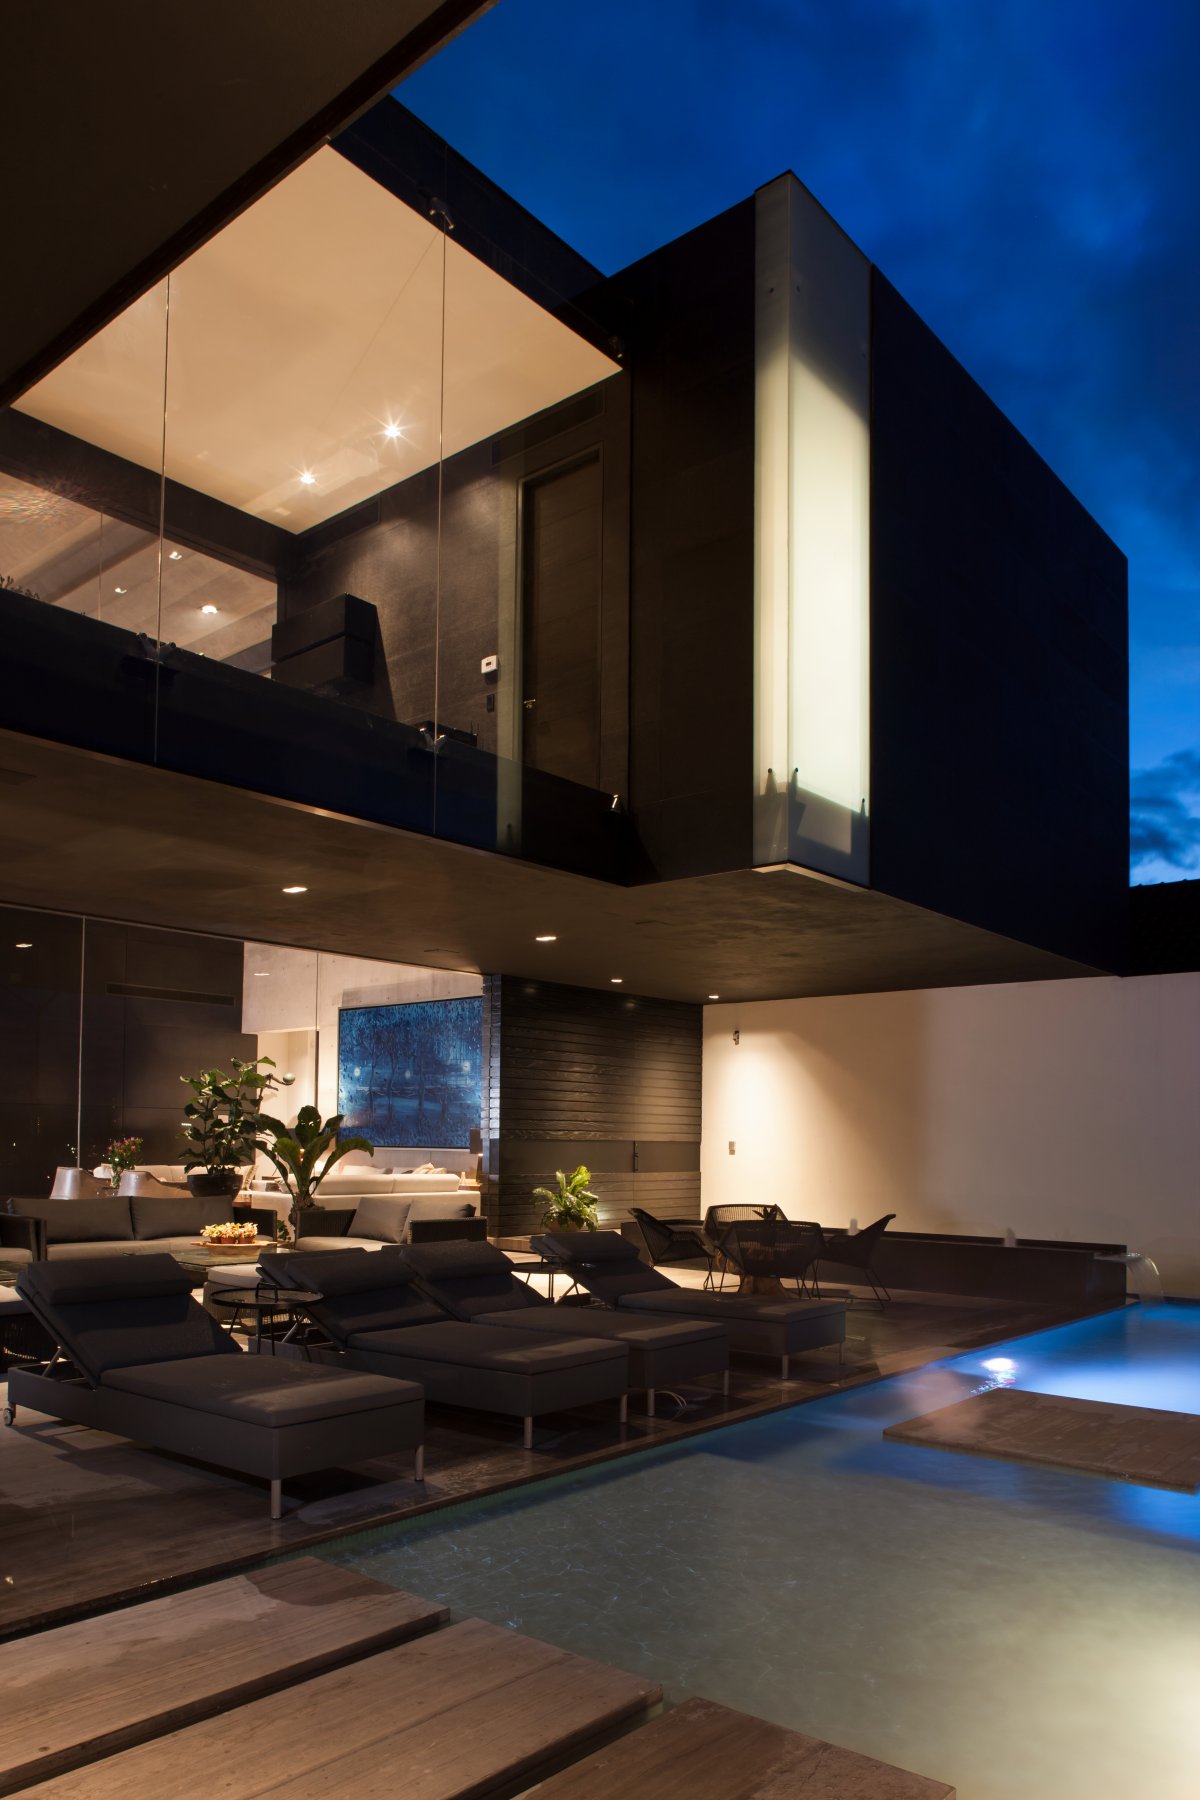 Pool, Terrace, Lighting, Stylish Contemporary Home in Garza Garcia, Mexico